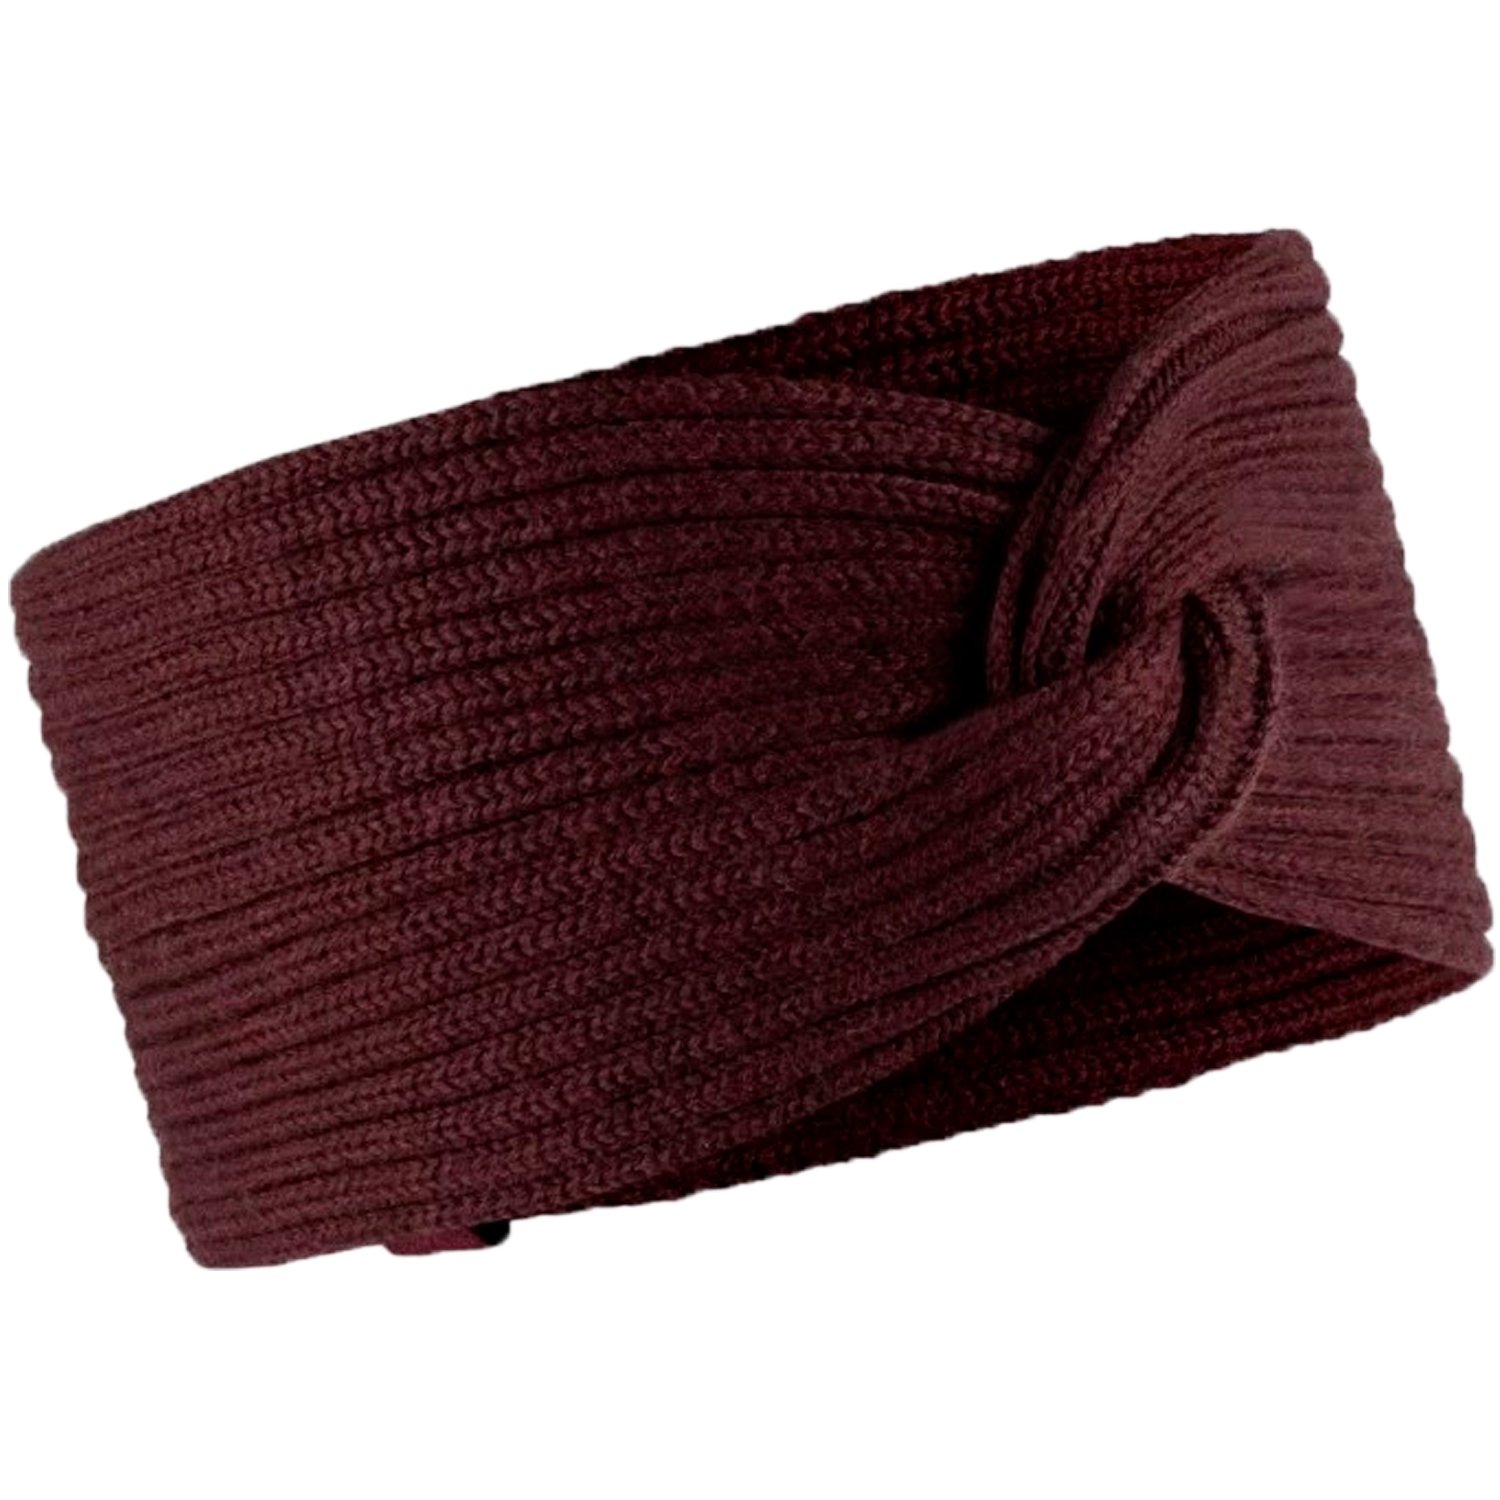 Повязка Buff Knitted Headband Norval Maroon, женский, 126459.632.10.00 повязка buff knitted hat norval graphite серый 126459 901 10 00